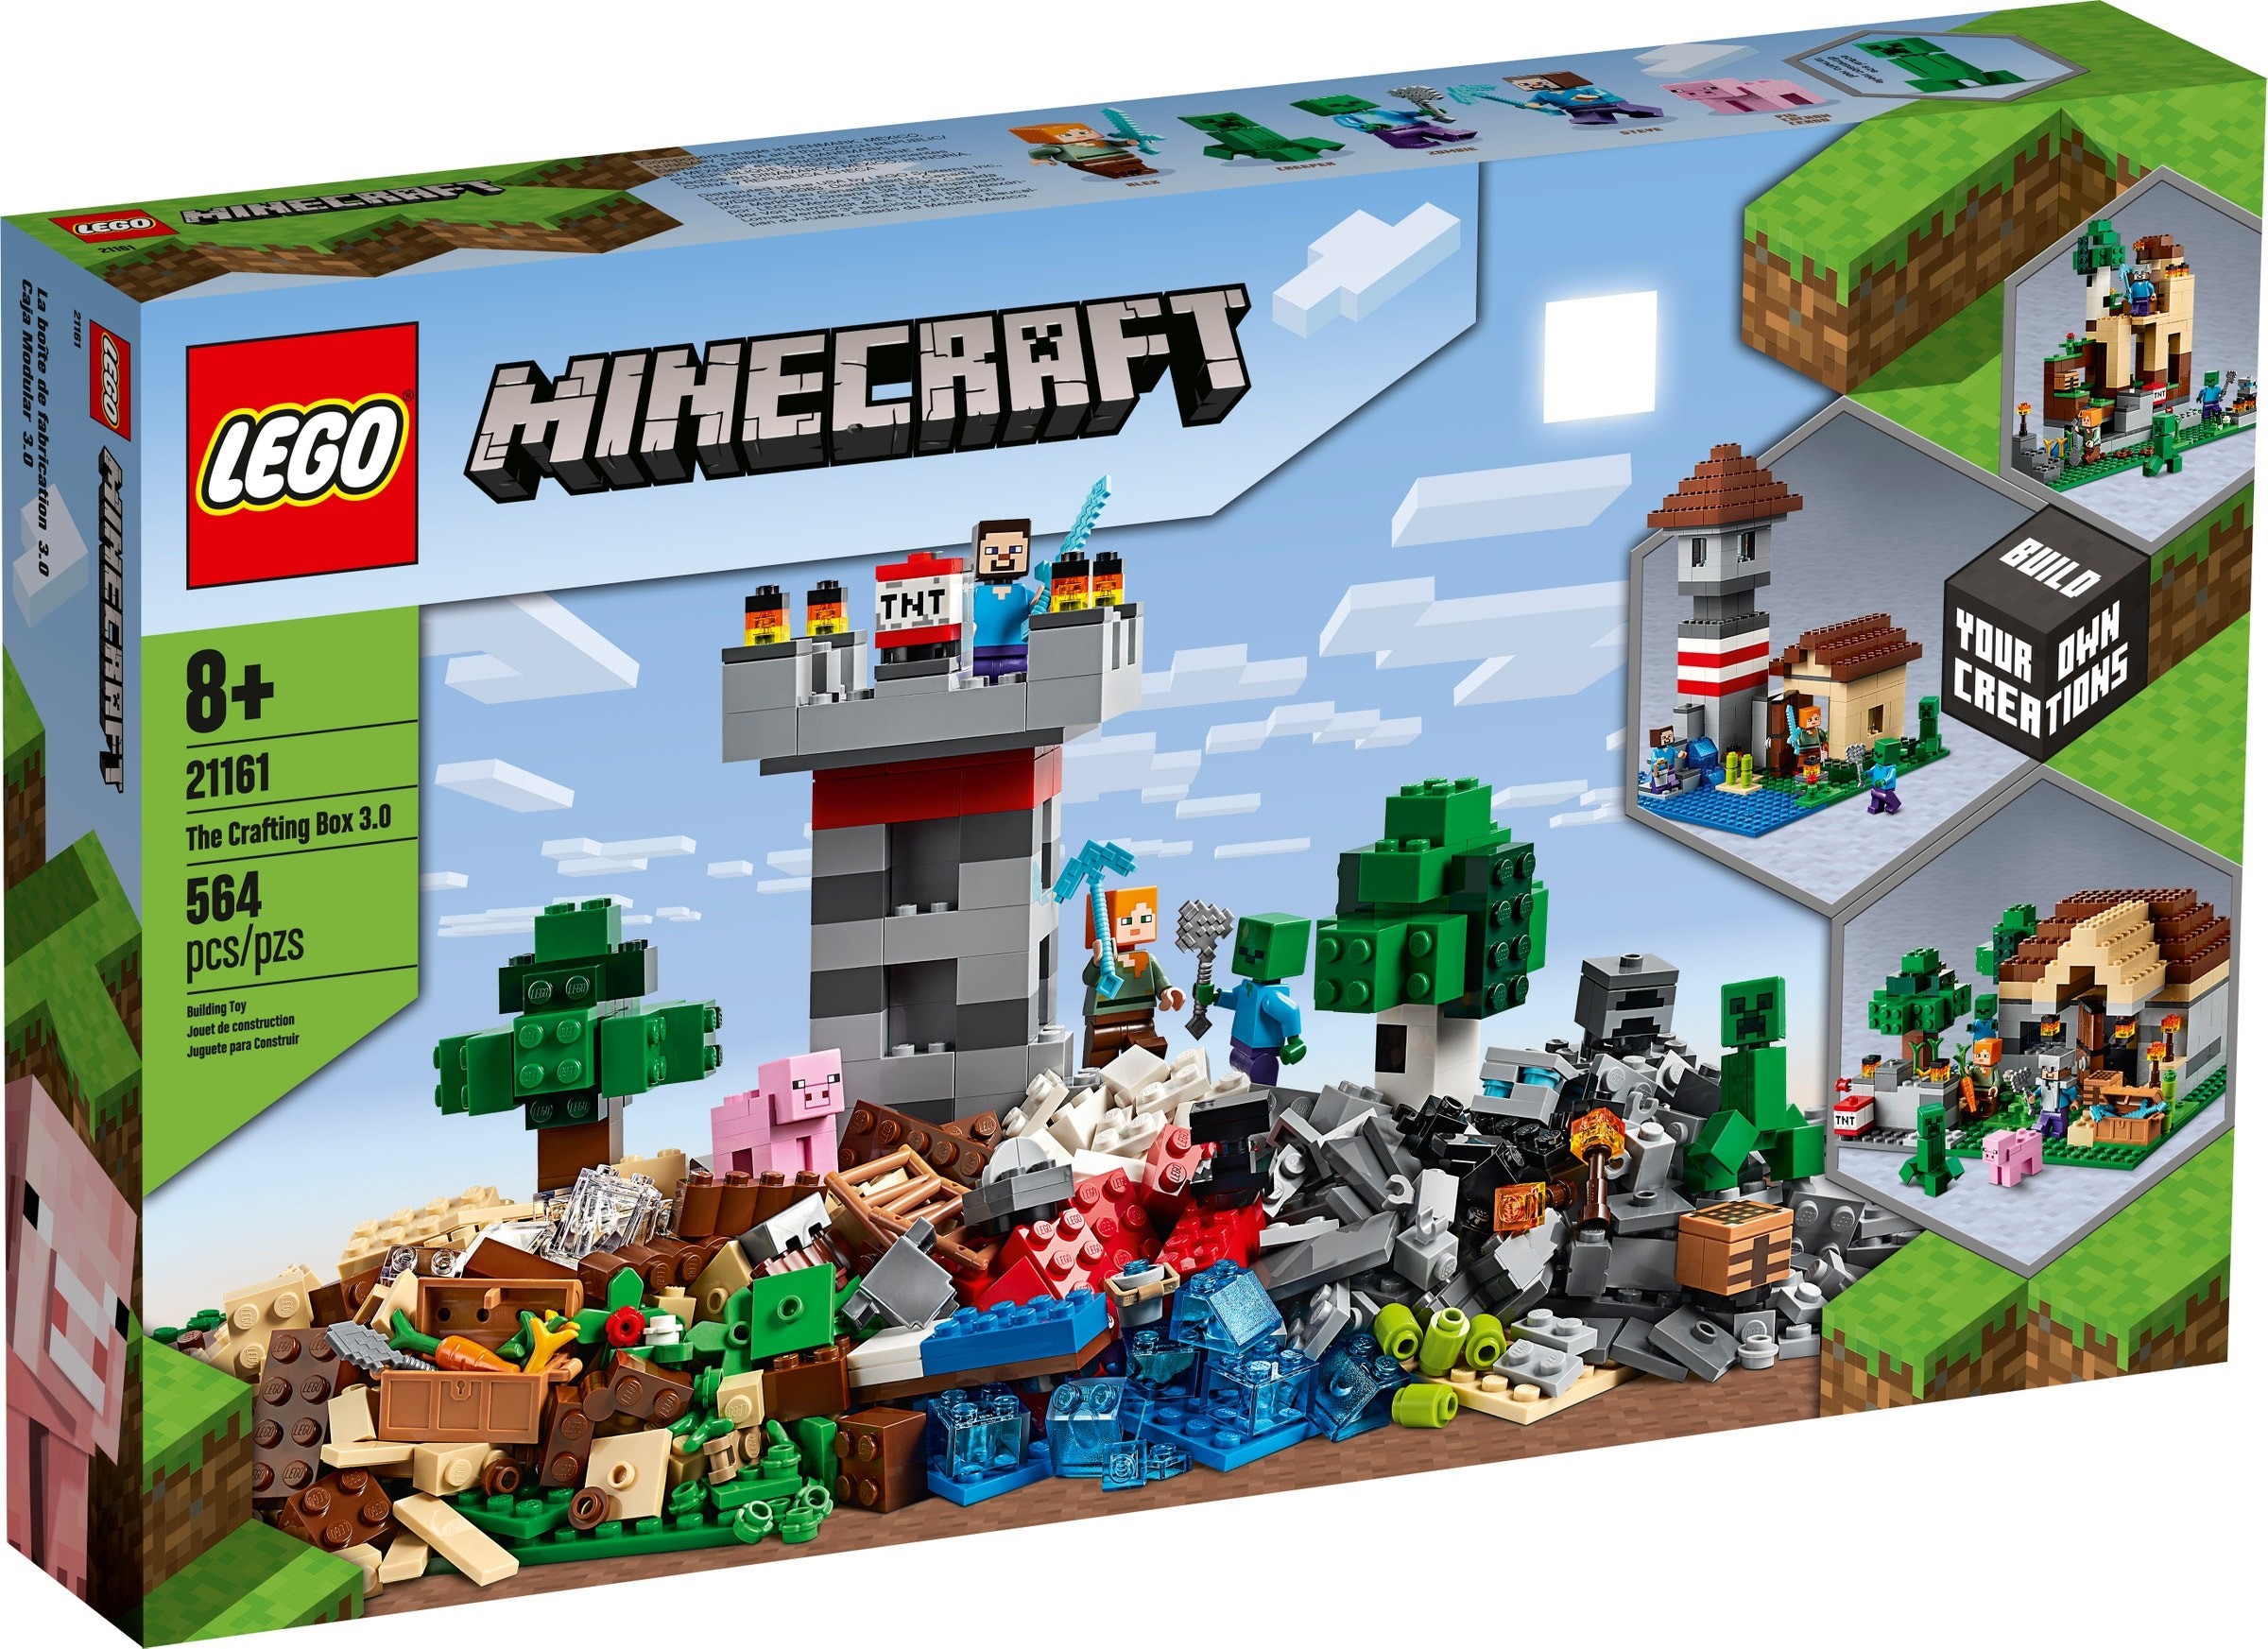 LEGO Minecraft - The Crafting Box 3.0 (21161)